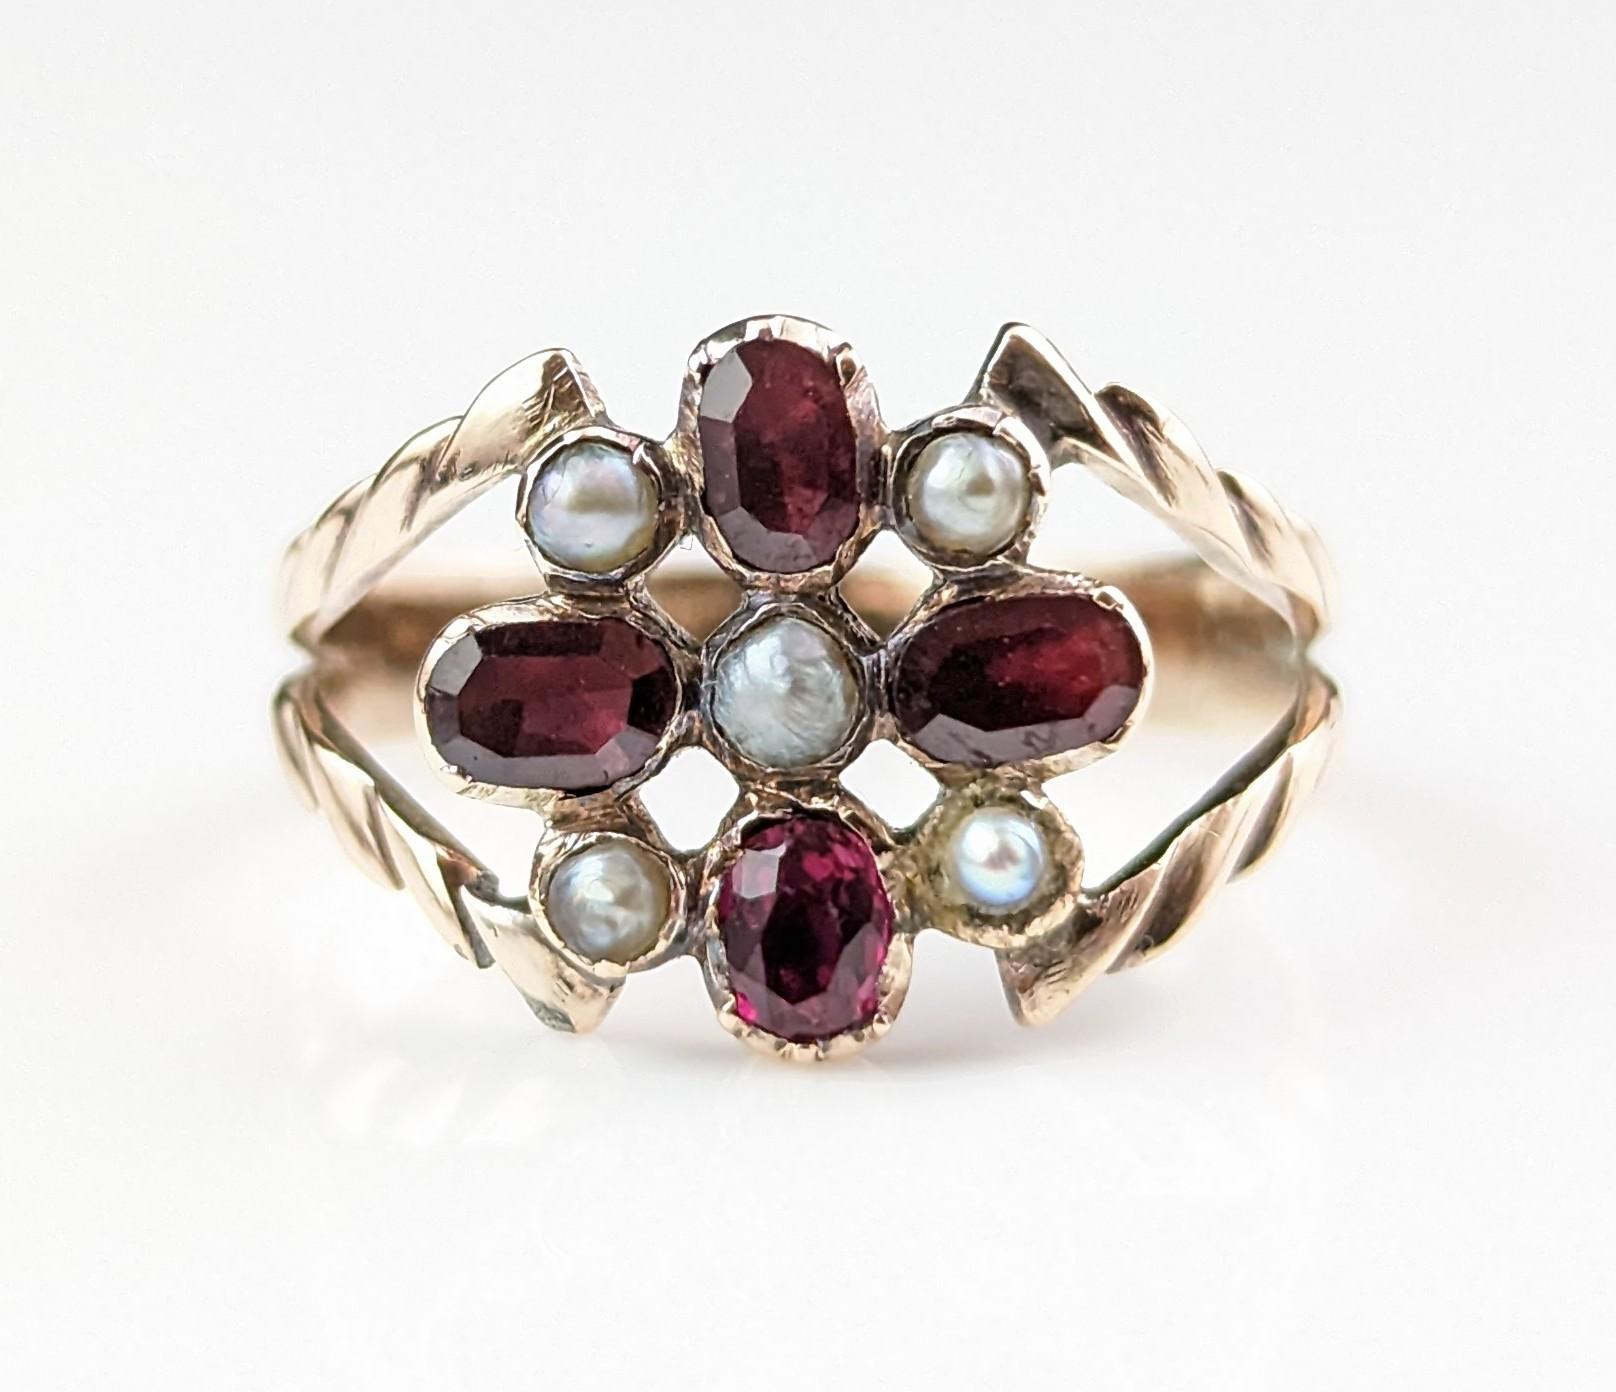 Antique Regency Era Floral Ring, Flat Cut Garnet, Pearl and Ruby, 9k Gold 6